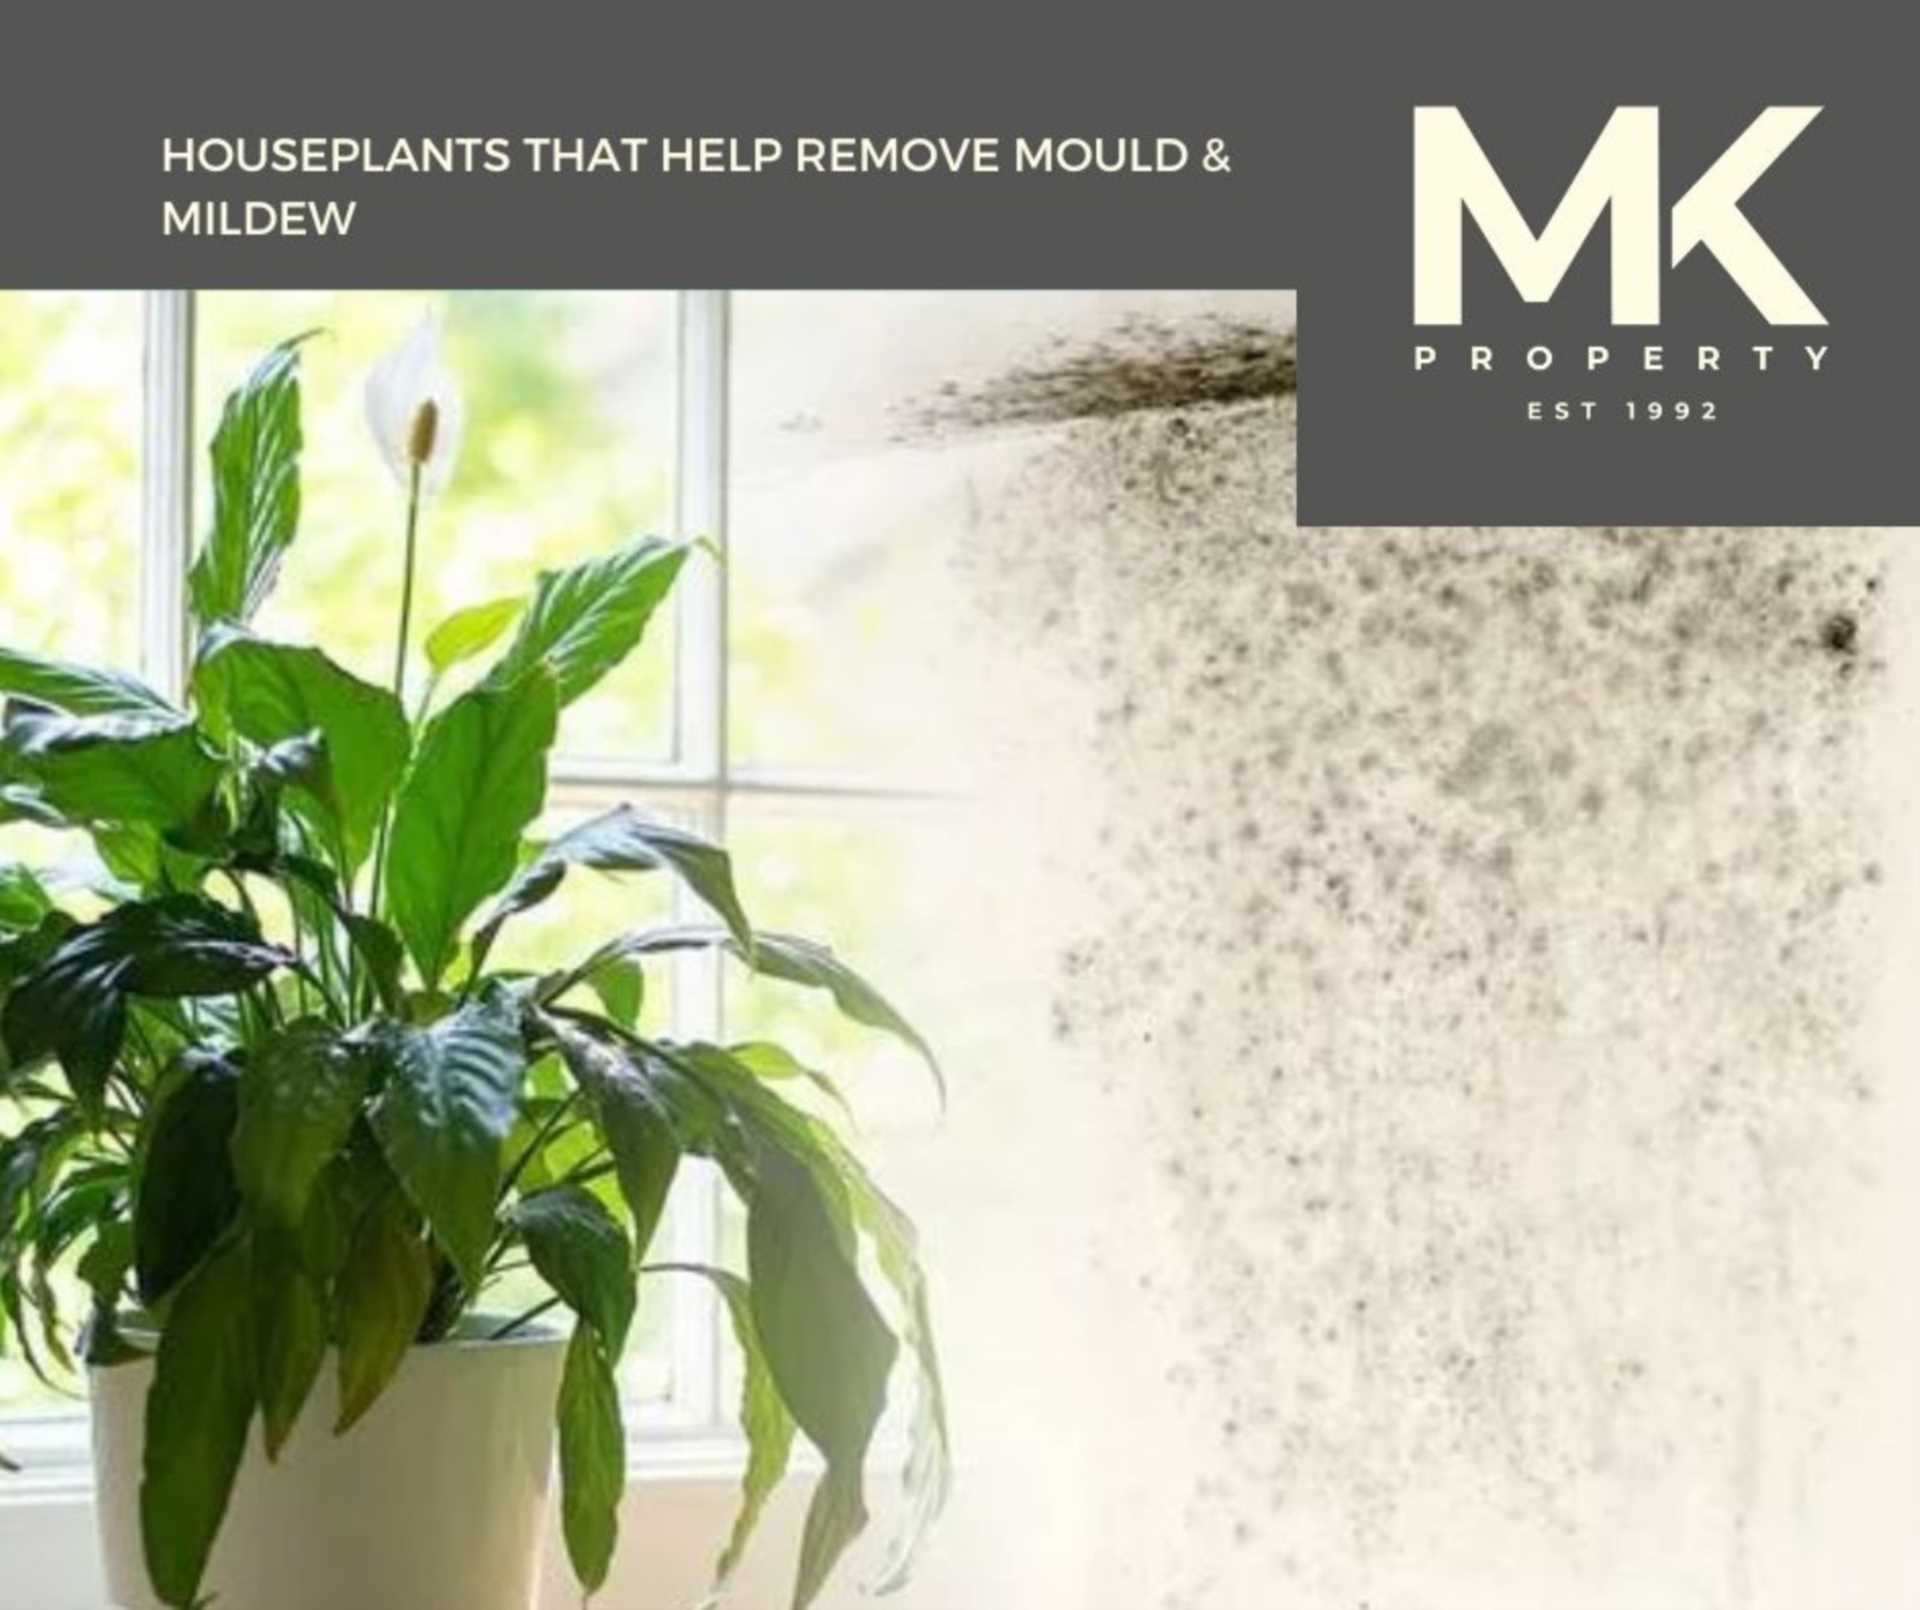 Houseplants That Help Remove Mould & Mildew